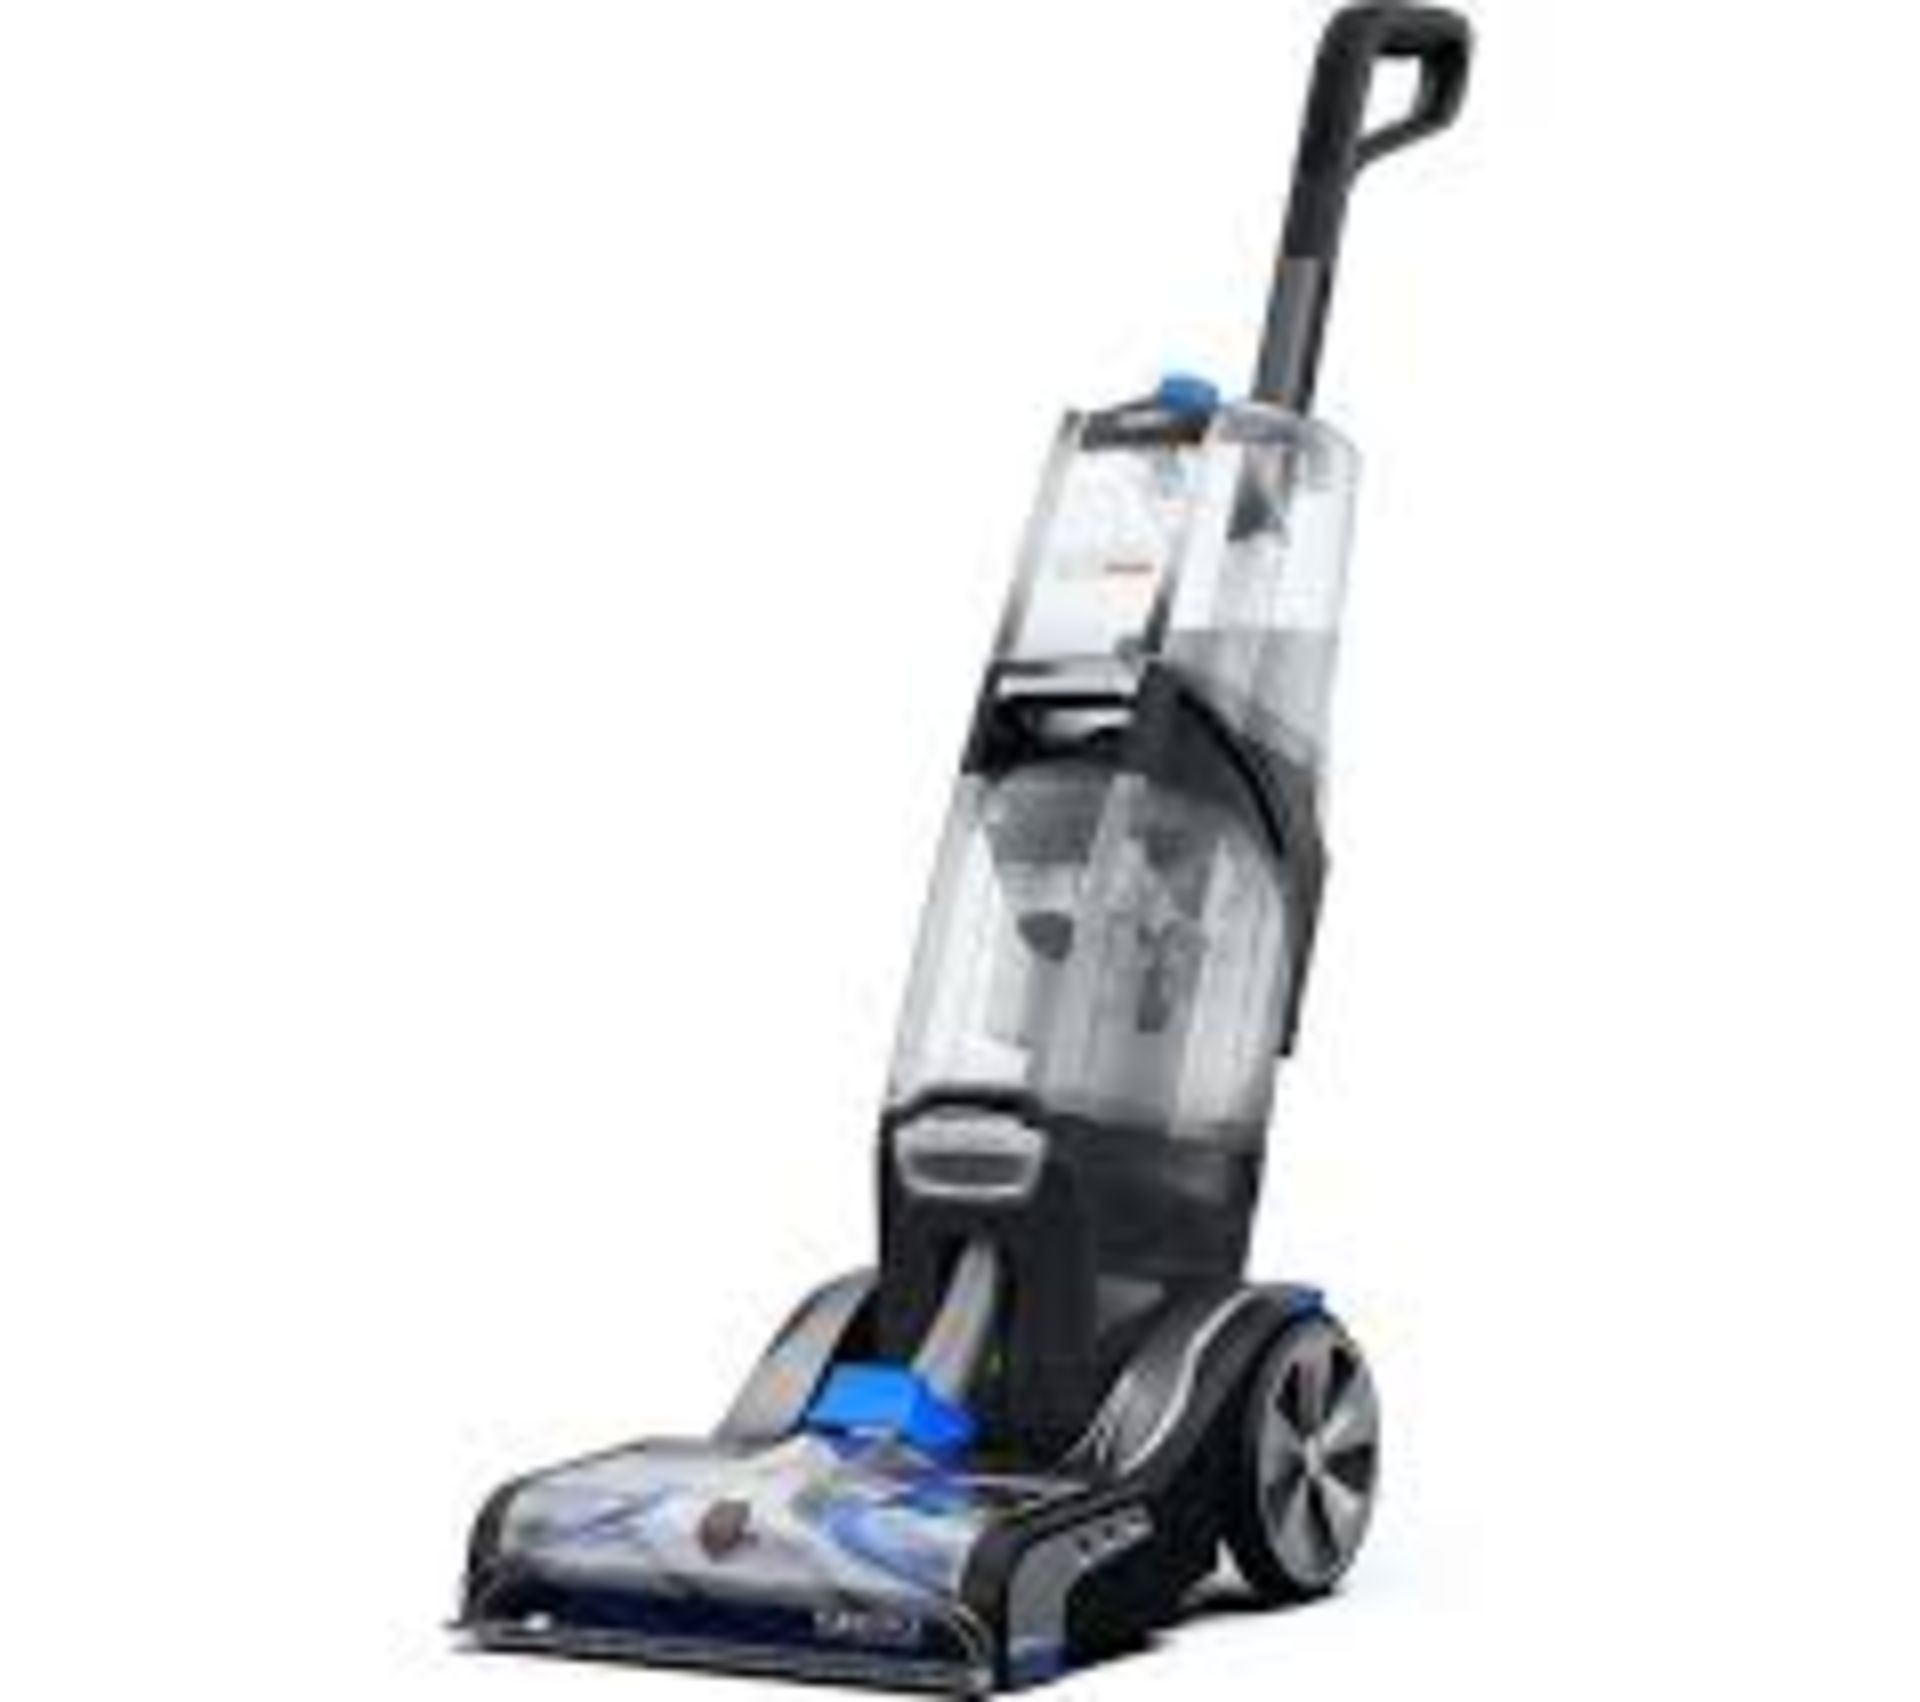 VAX Platinum SmartWash 1-1-142257 Upright Carpet Cleaner - Charcoal & Blue. - R10.10. Give your